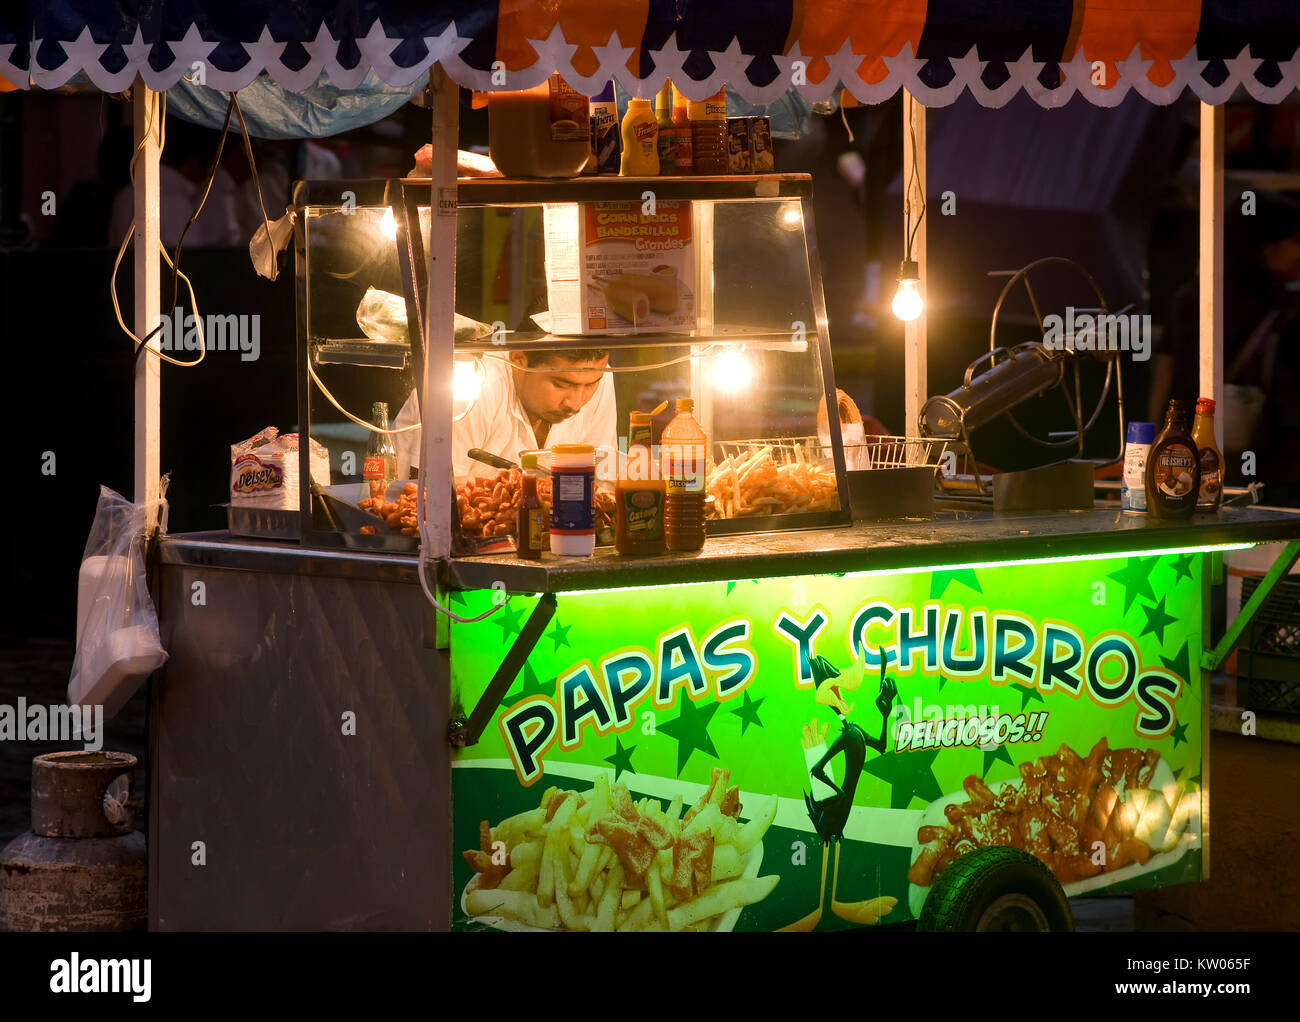 Food seller in the Zocalo (Main square) in Merida, Mexico Stock Photo